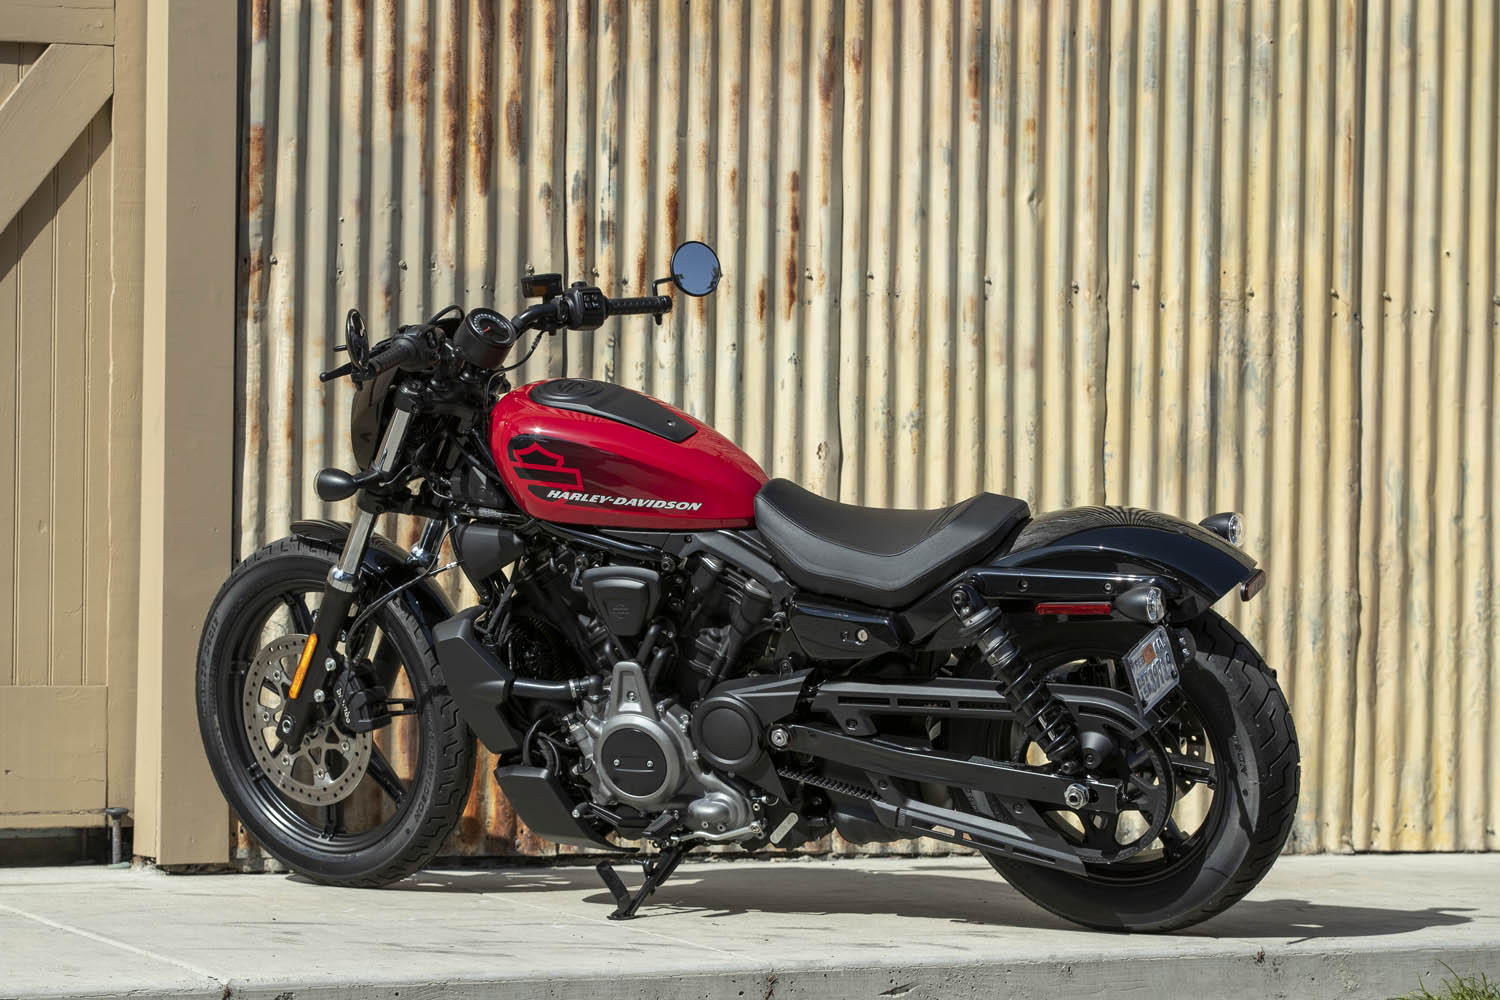 2022 HarleyDavidson Nightster First Ride Review Rider Magazine